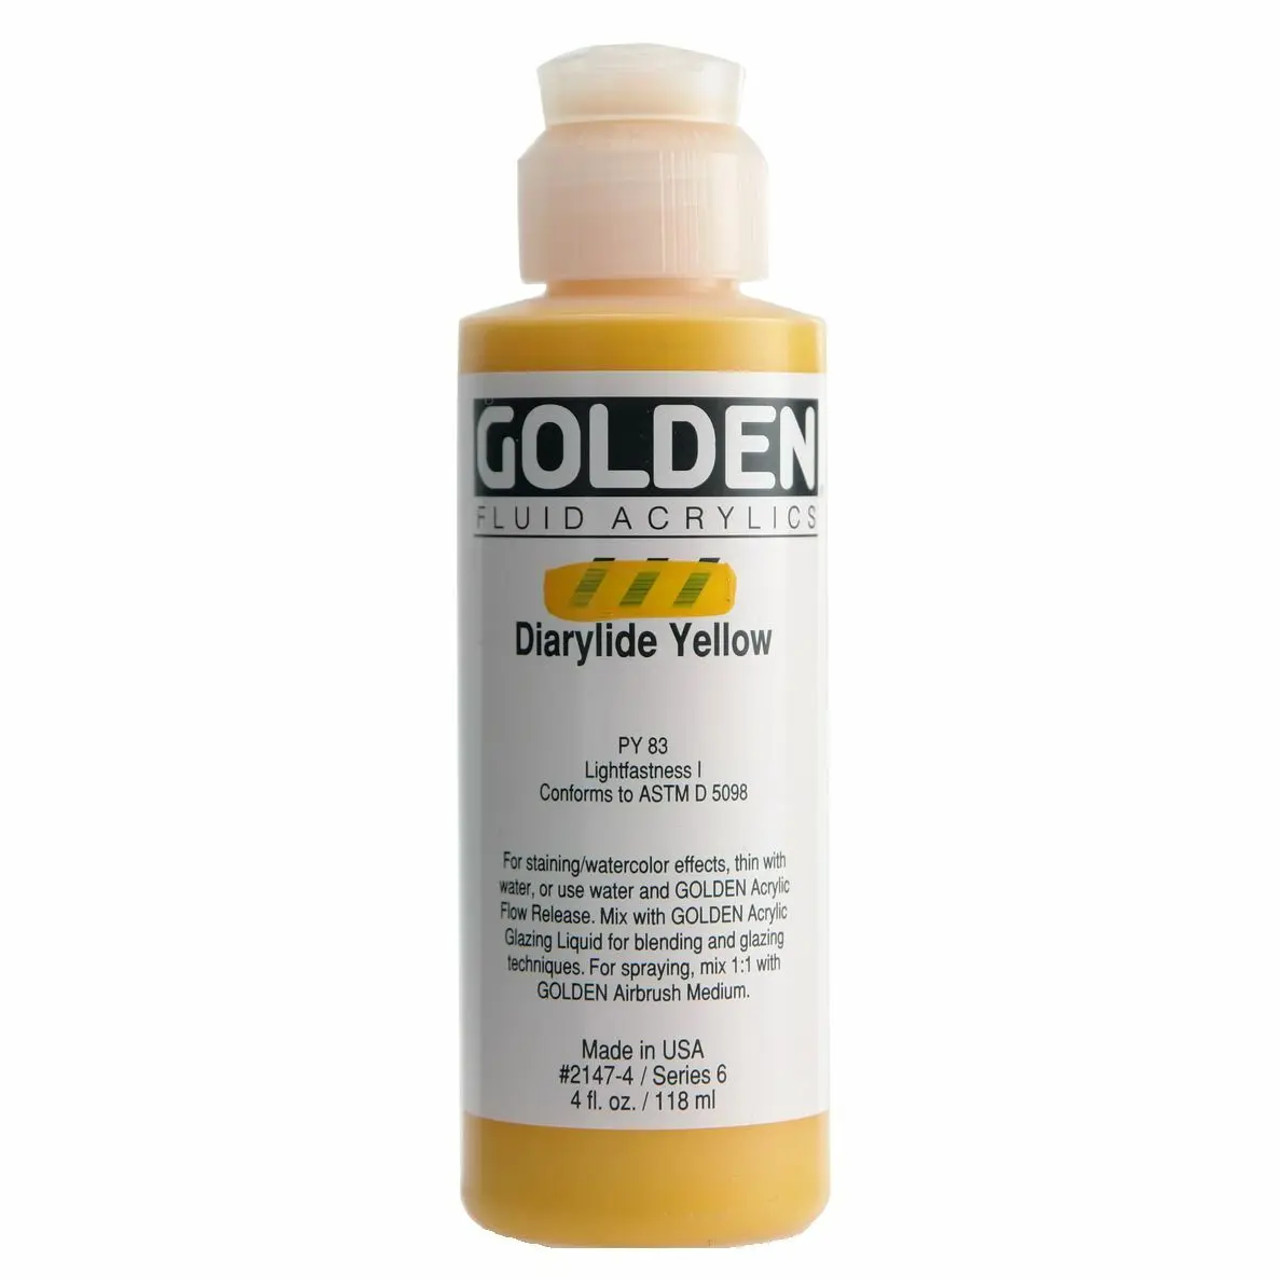 Golden Fluid Acrylic - Quinacridone Magenta 8 oz.